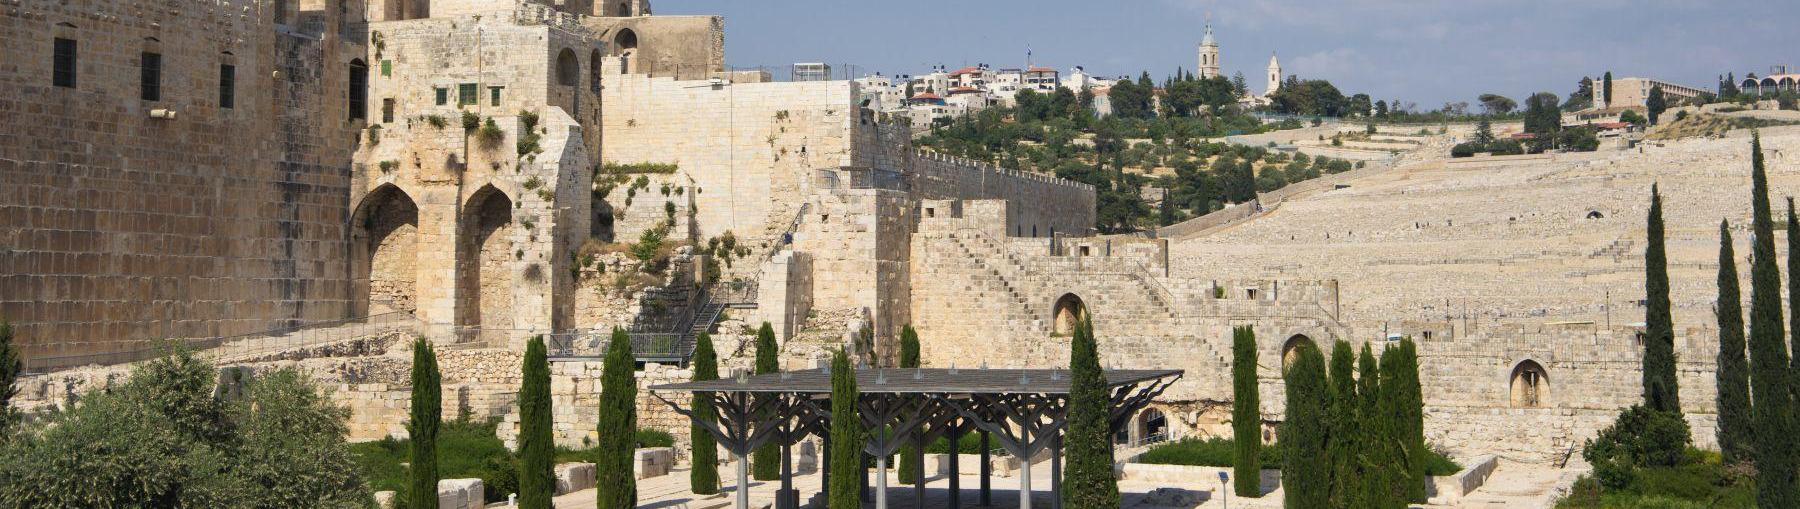 Cmentarz Har HaMenuchot w Jerozolimie (Izrael) Fot. Shutterstock